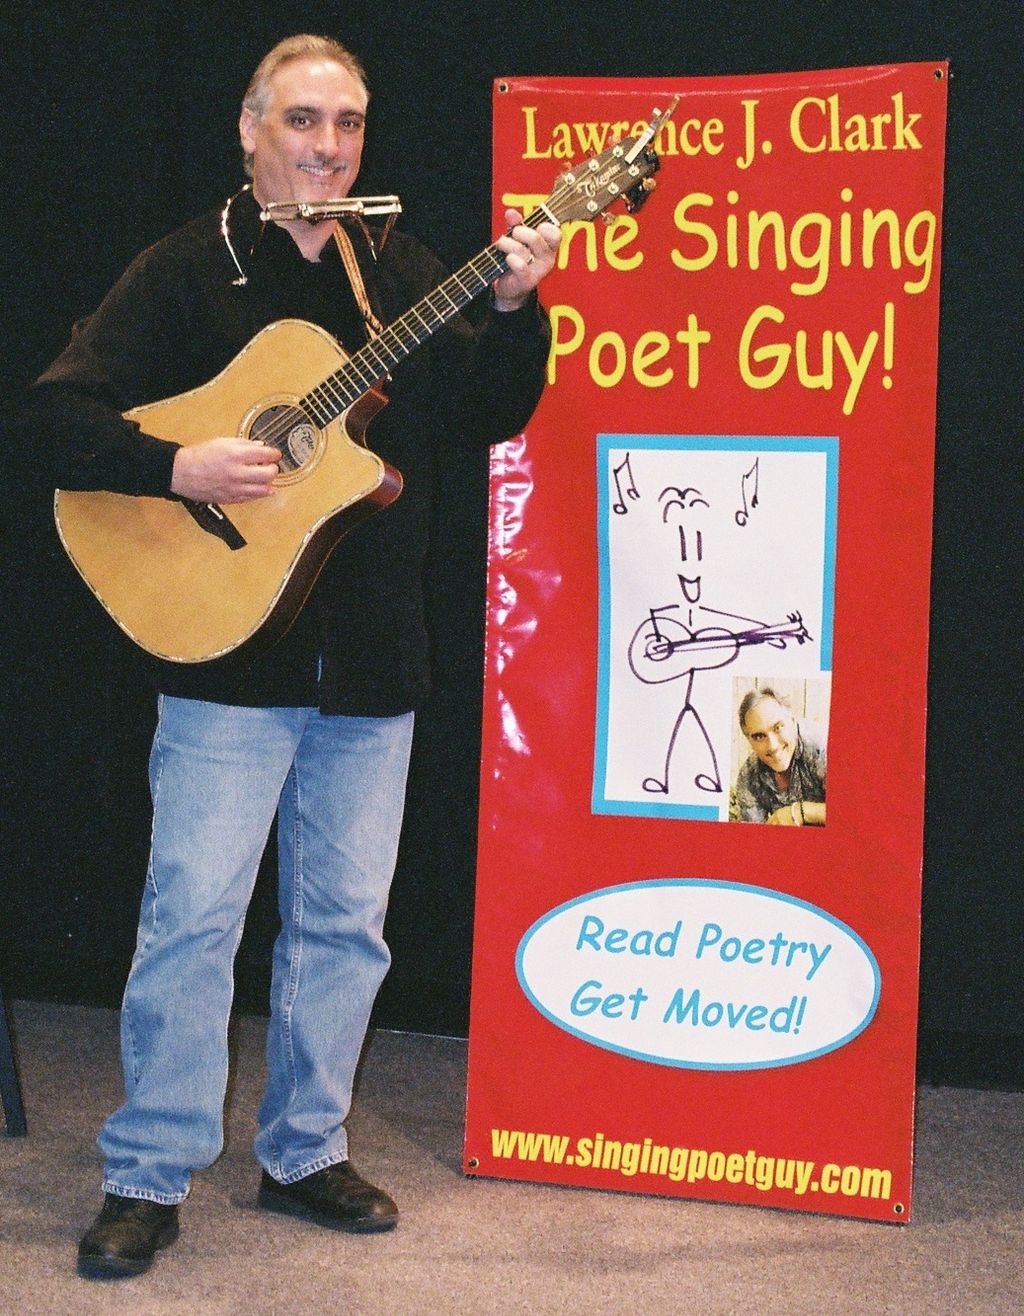 Lawrence J. Clark: The Singing Poet Guy!